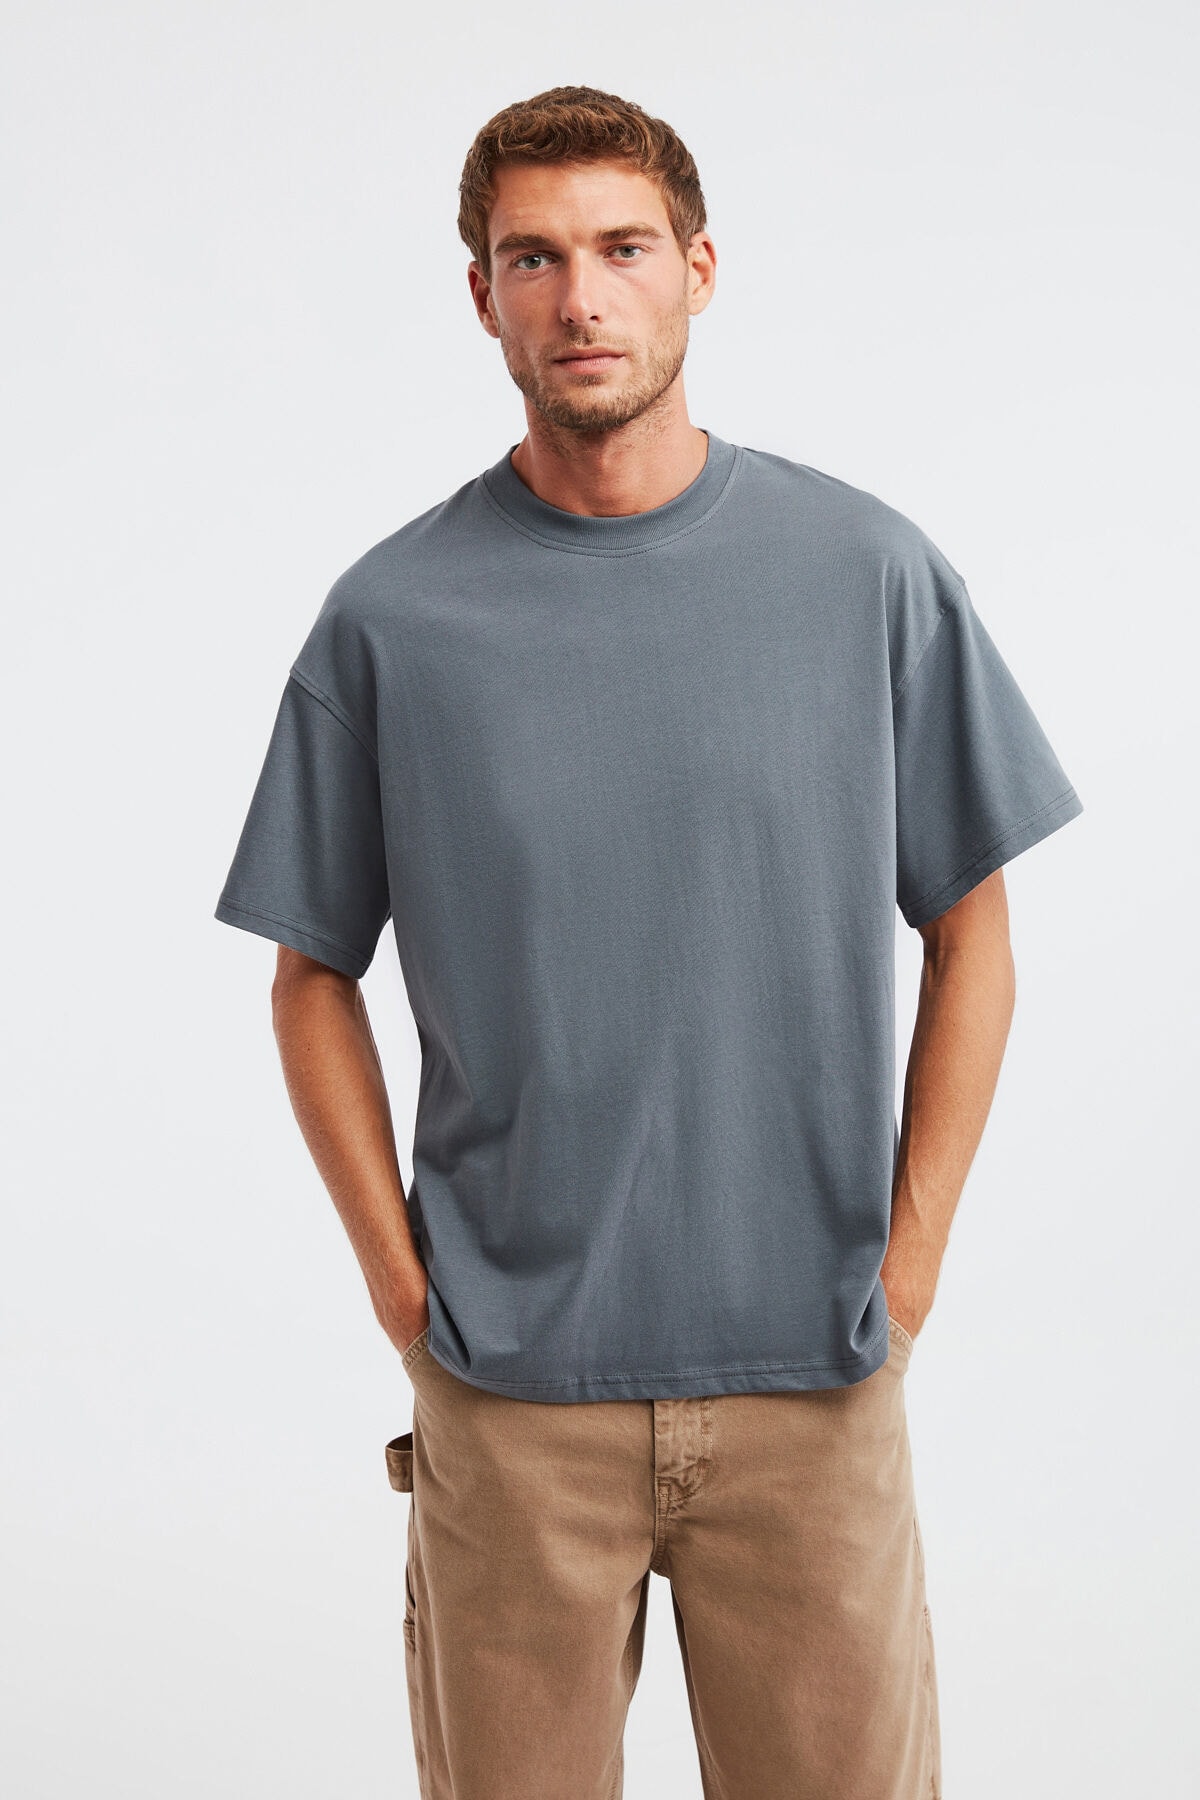 Levně GRIMELANGE Jett Men's Oversize Fit 100% Cotton Thick Textured Light Gray T-shirt